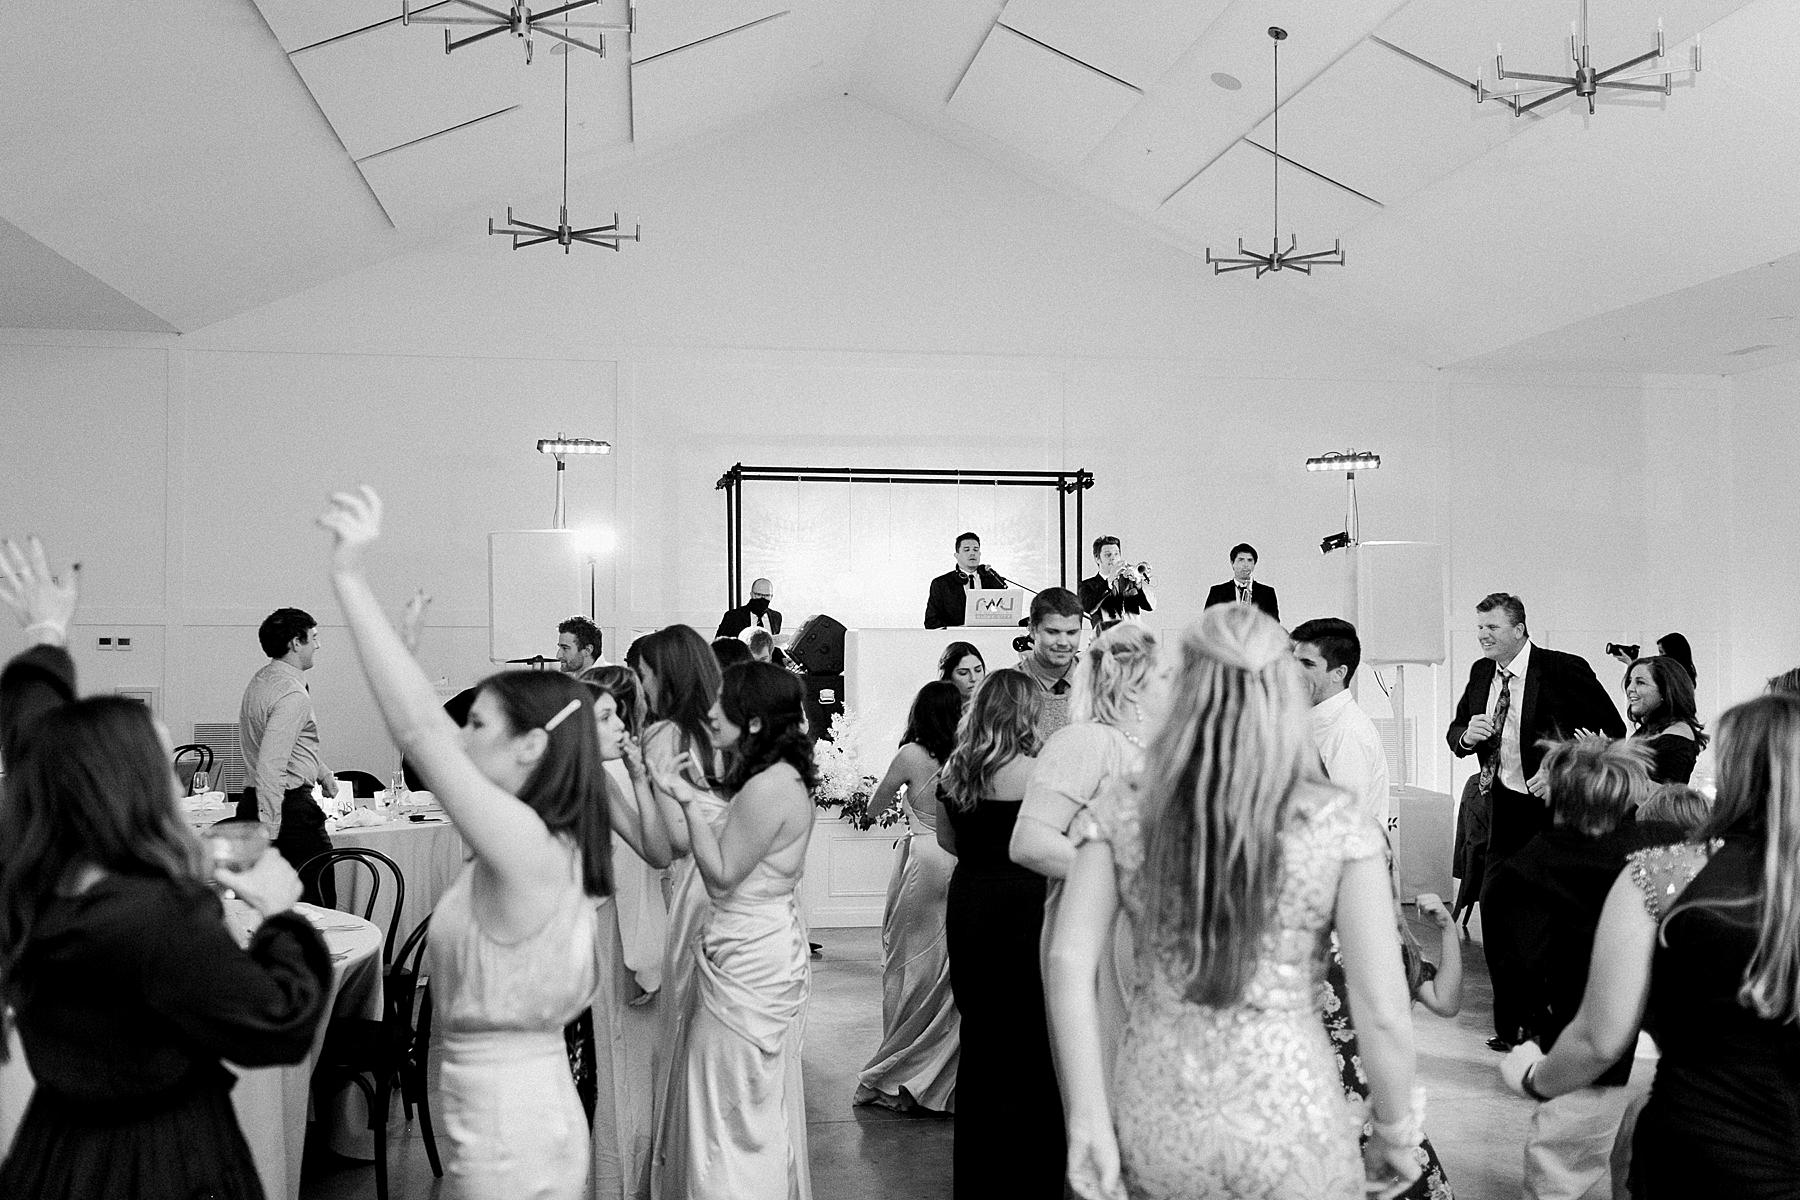 dancing reception at hutton house wedding venue in minneapolis minnesota